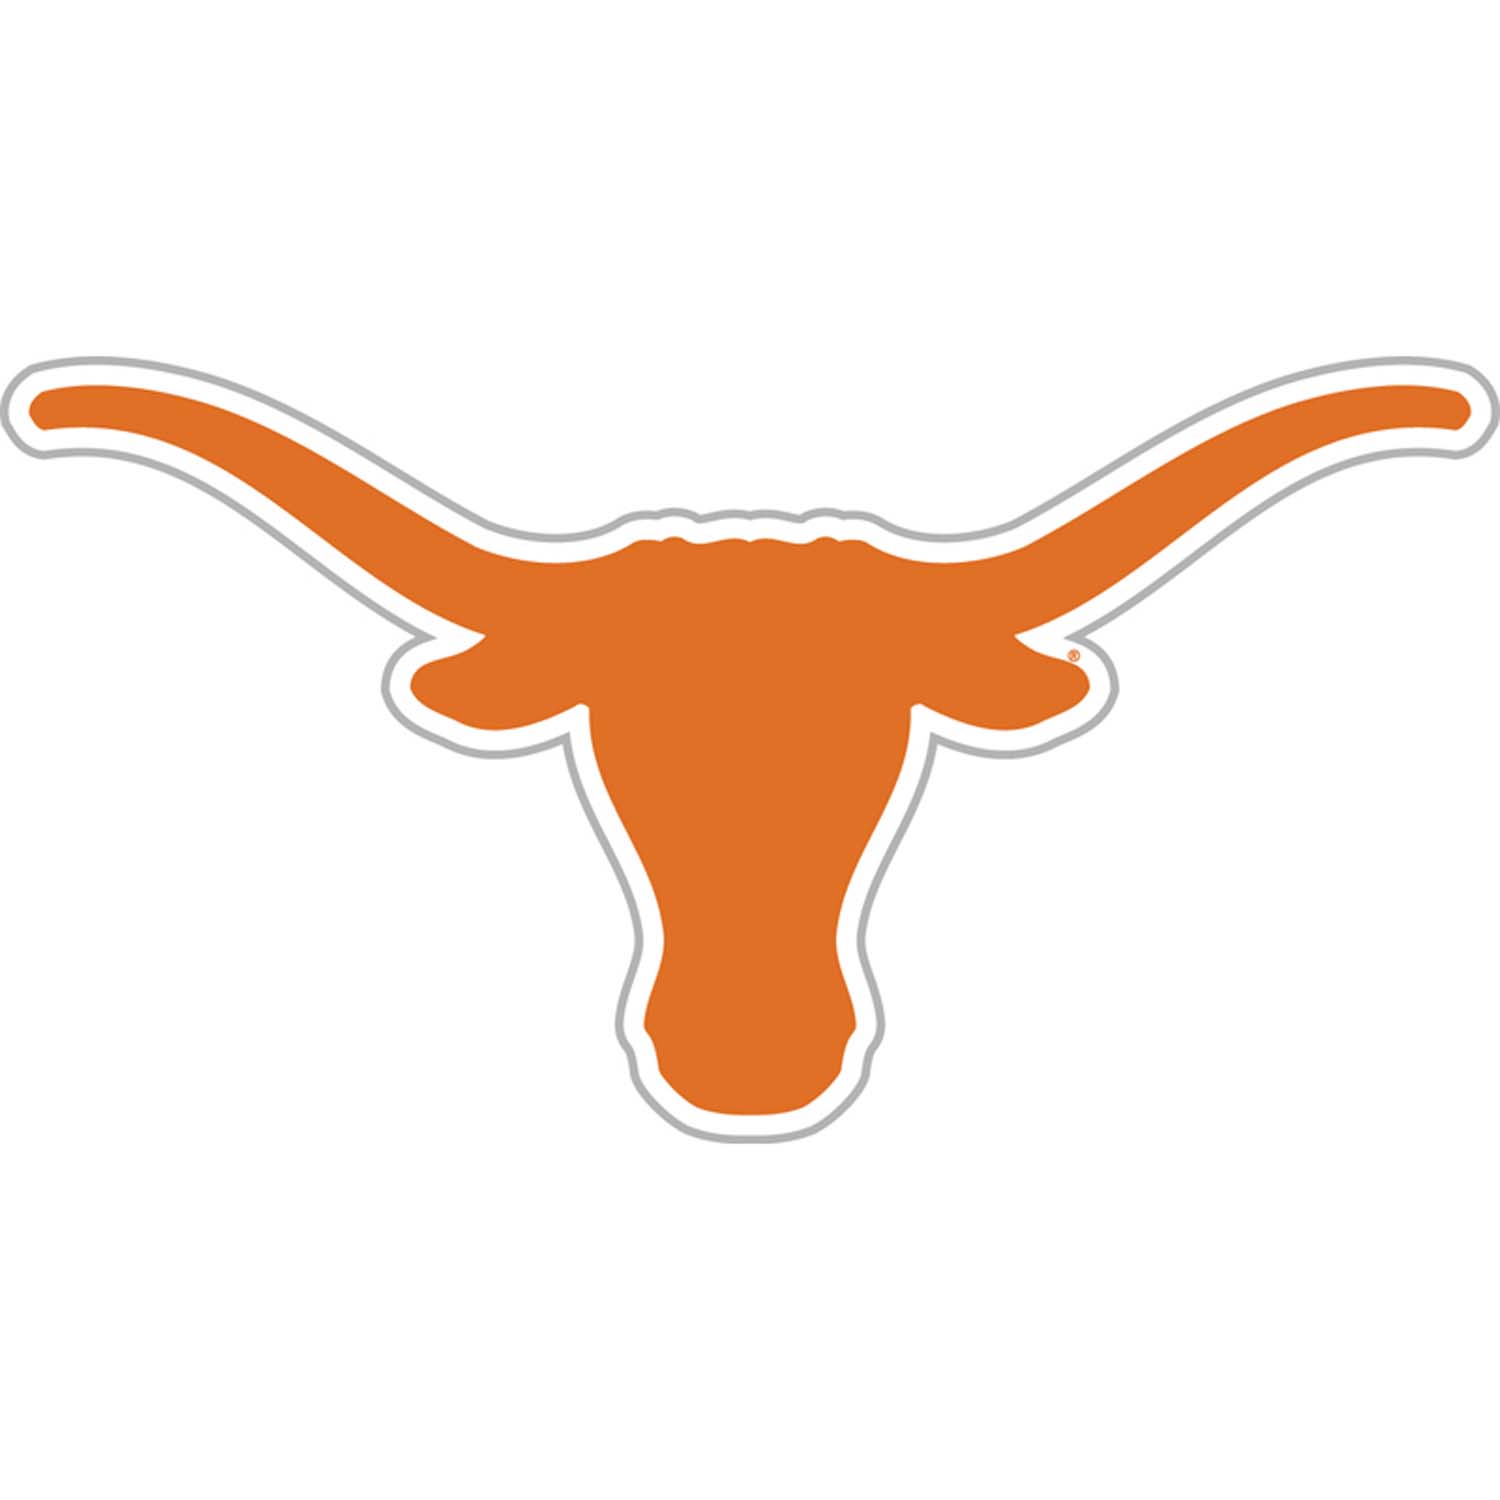 Texas Longhorn Logos | FindThatLogo.